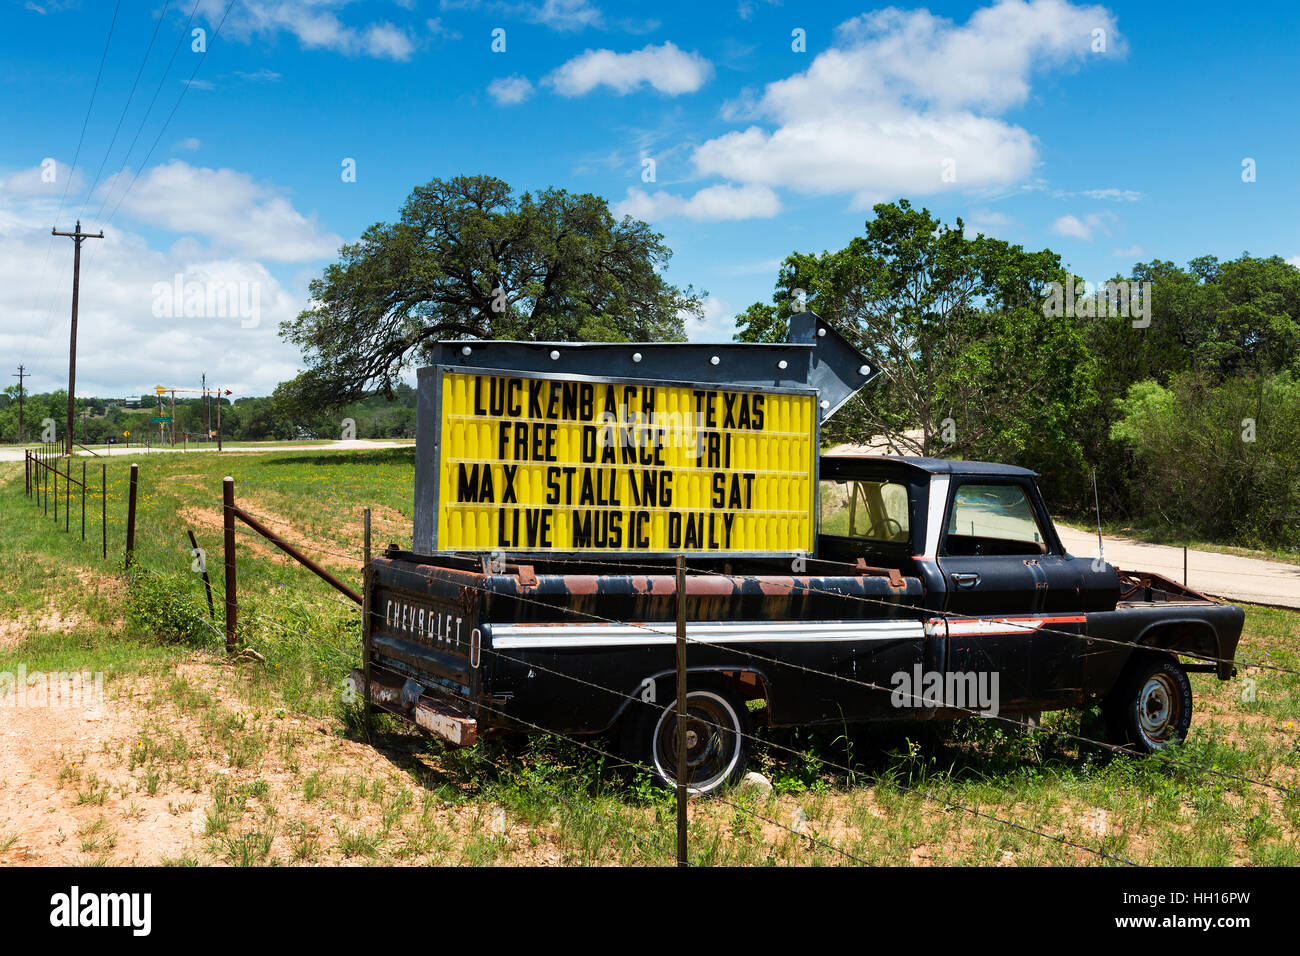 Luckenbach, Texas, USA - 8 juin 2014 : ancien camion avec un signe pour un événement musical dans Luckenbach, Texas, USA. Banque D'Images